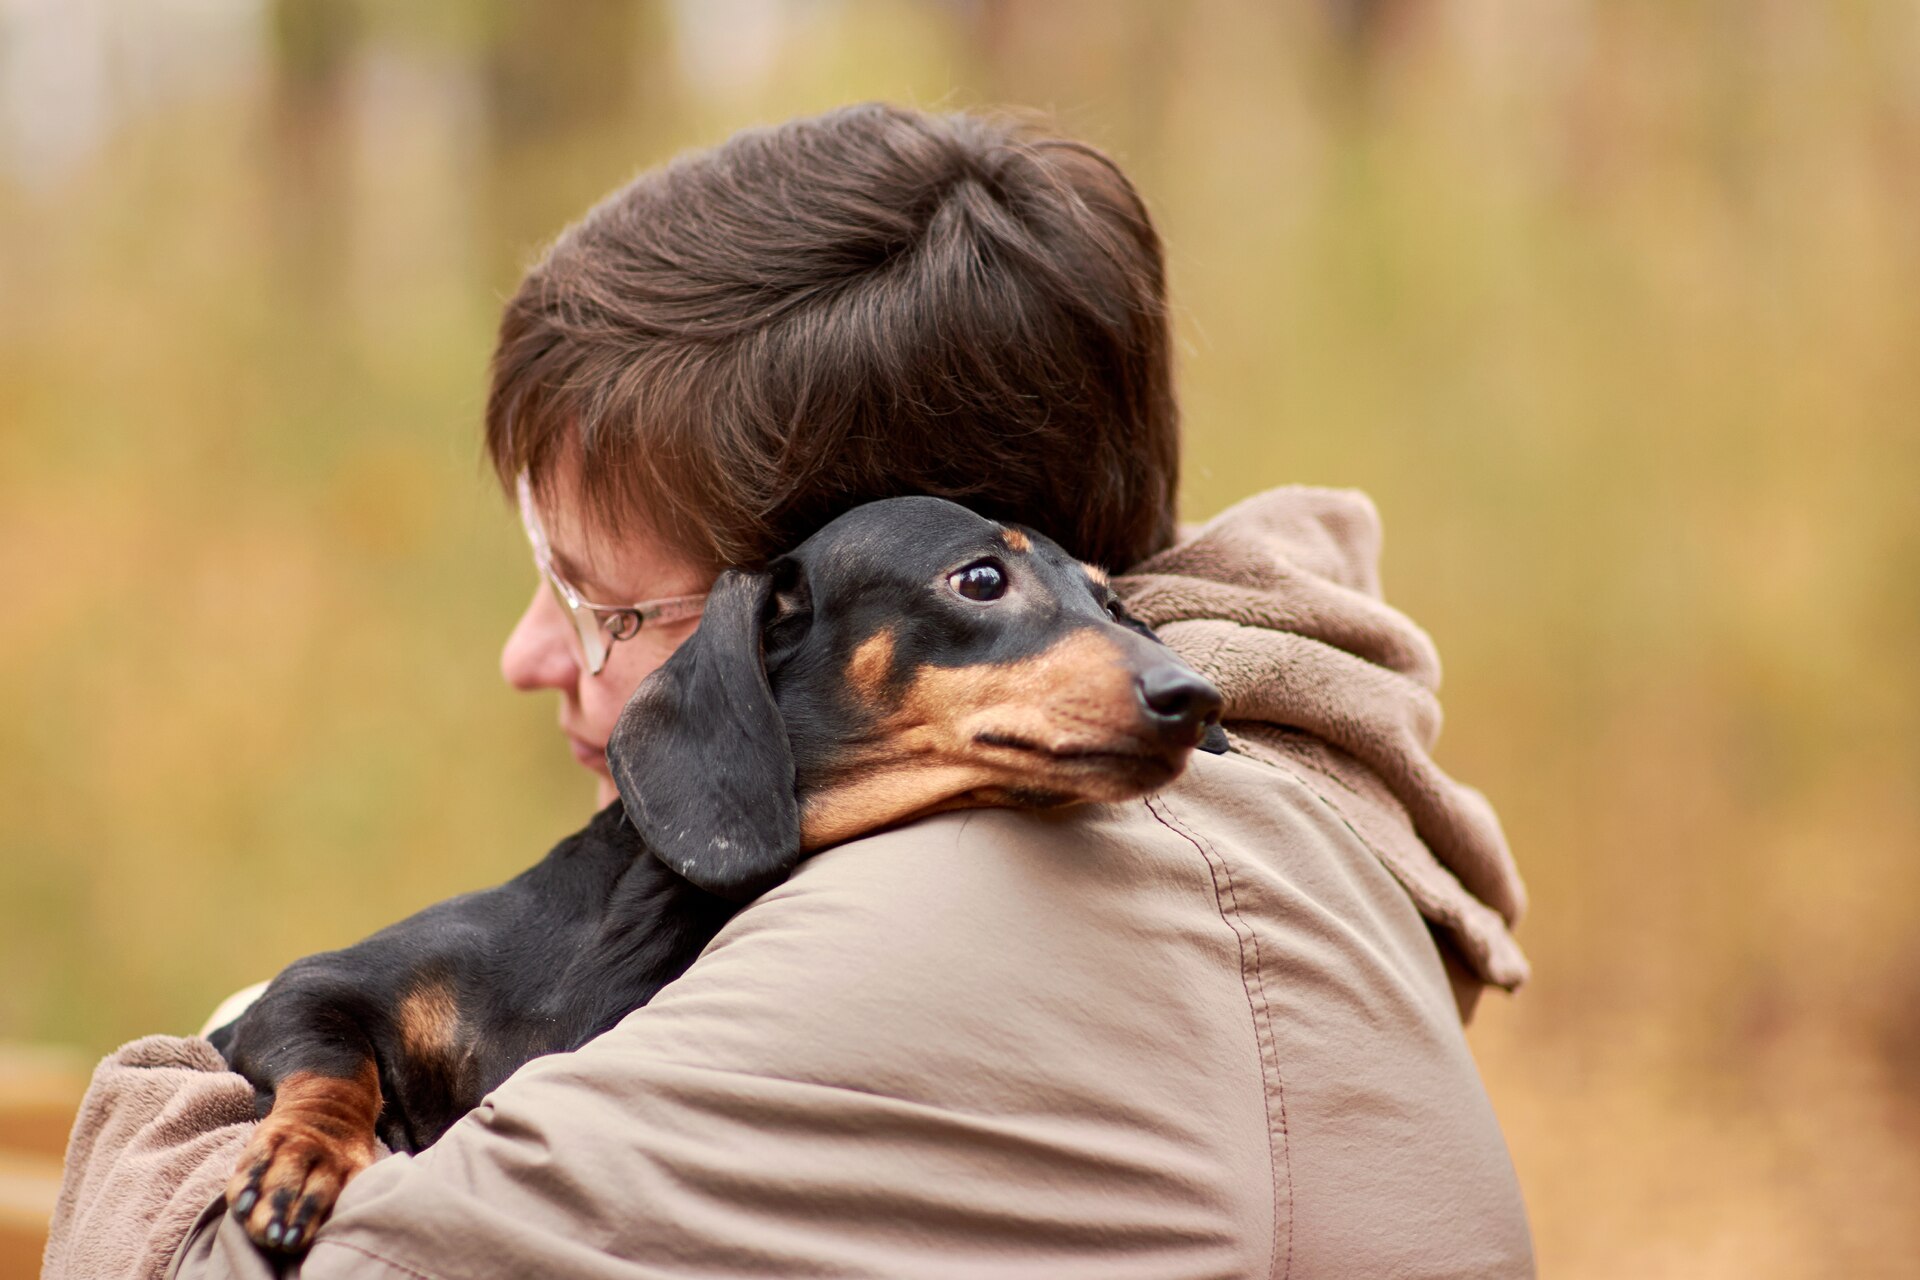 A woman hugging a sick dog